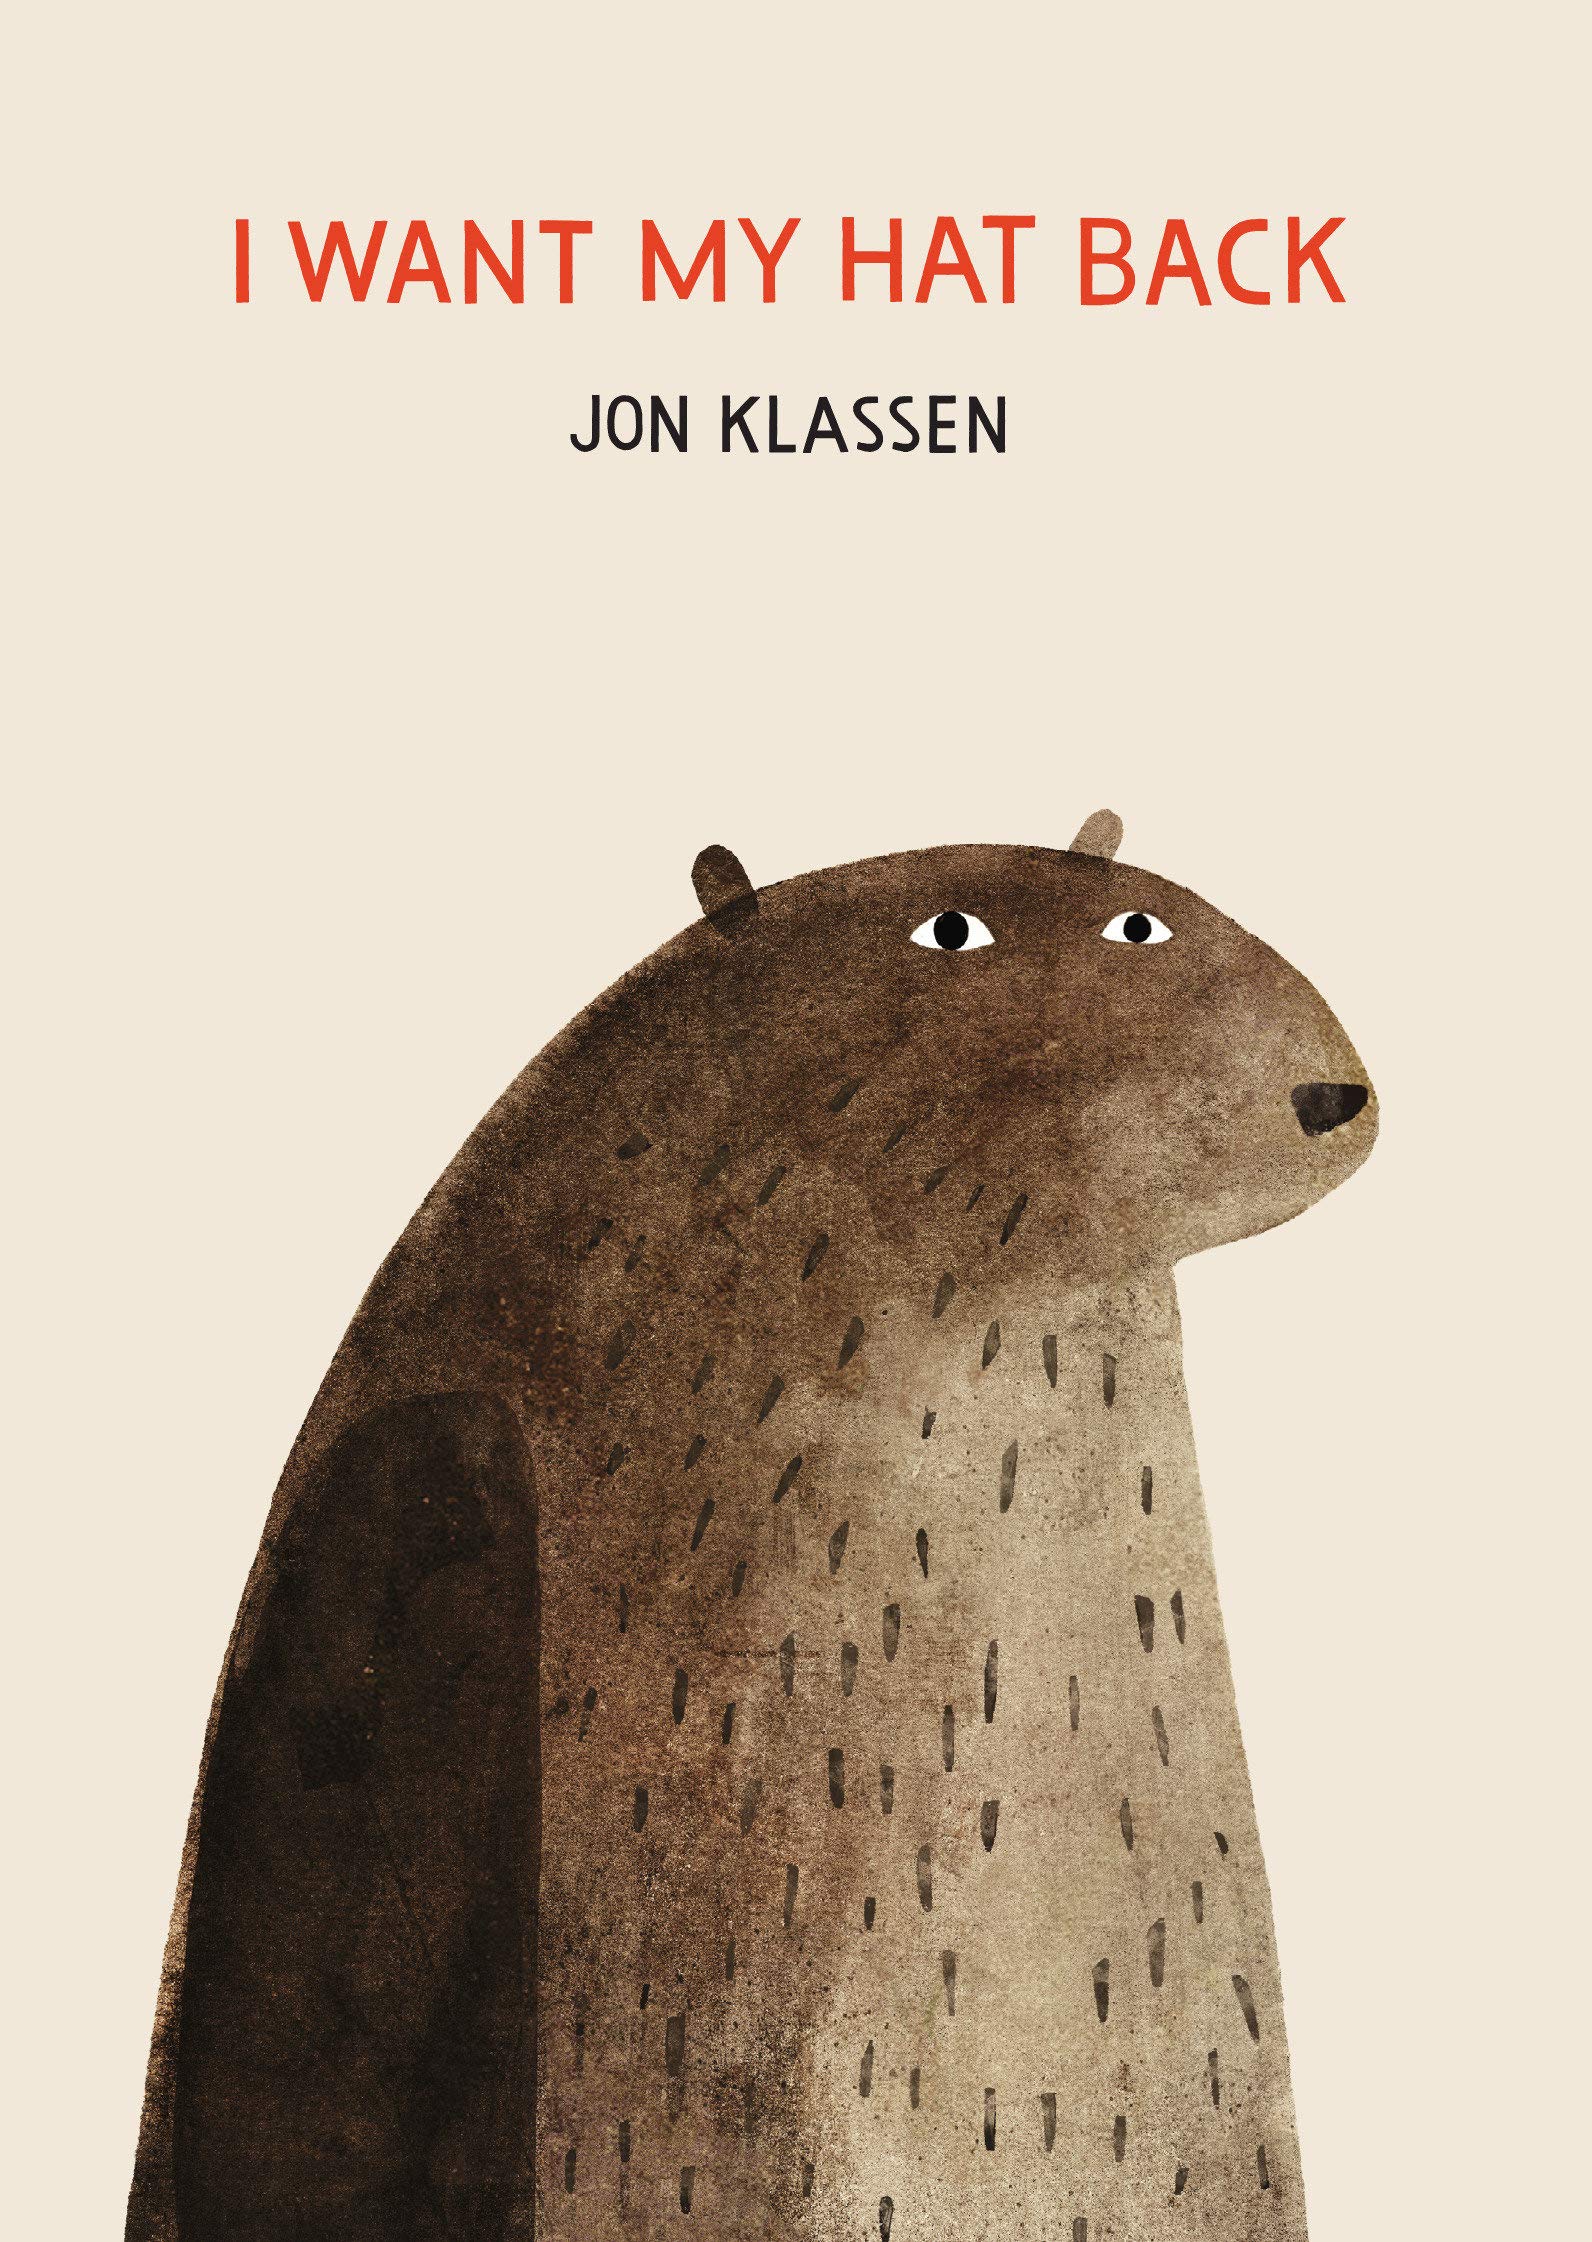 I Want My Hat Back book cover by Jon Klassen